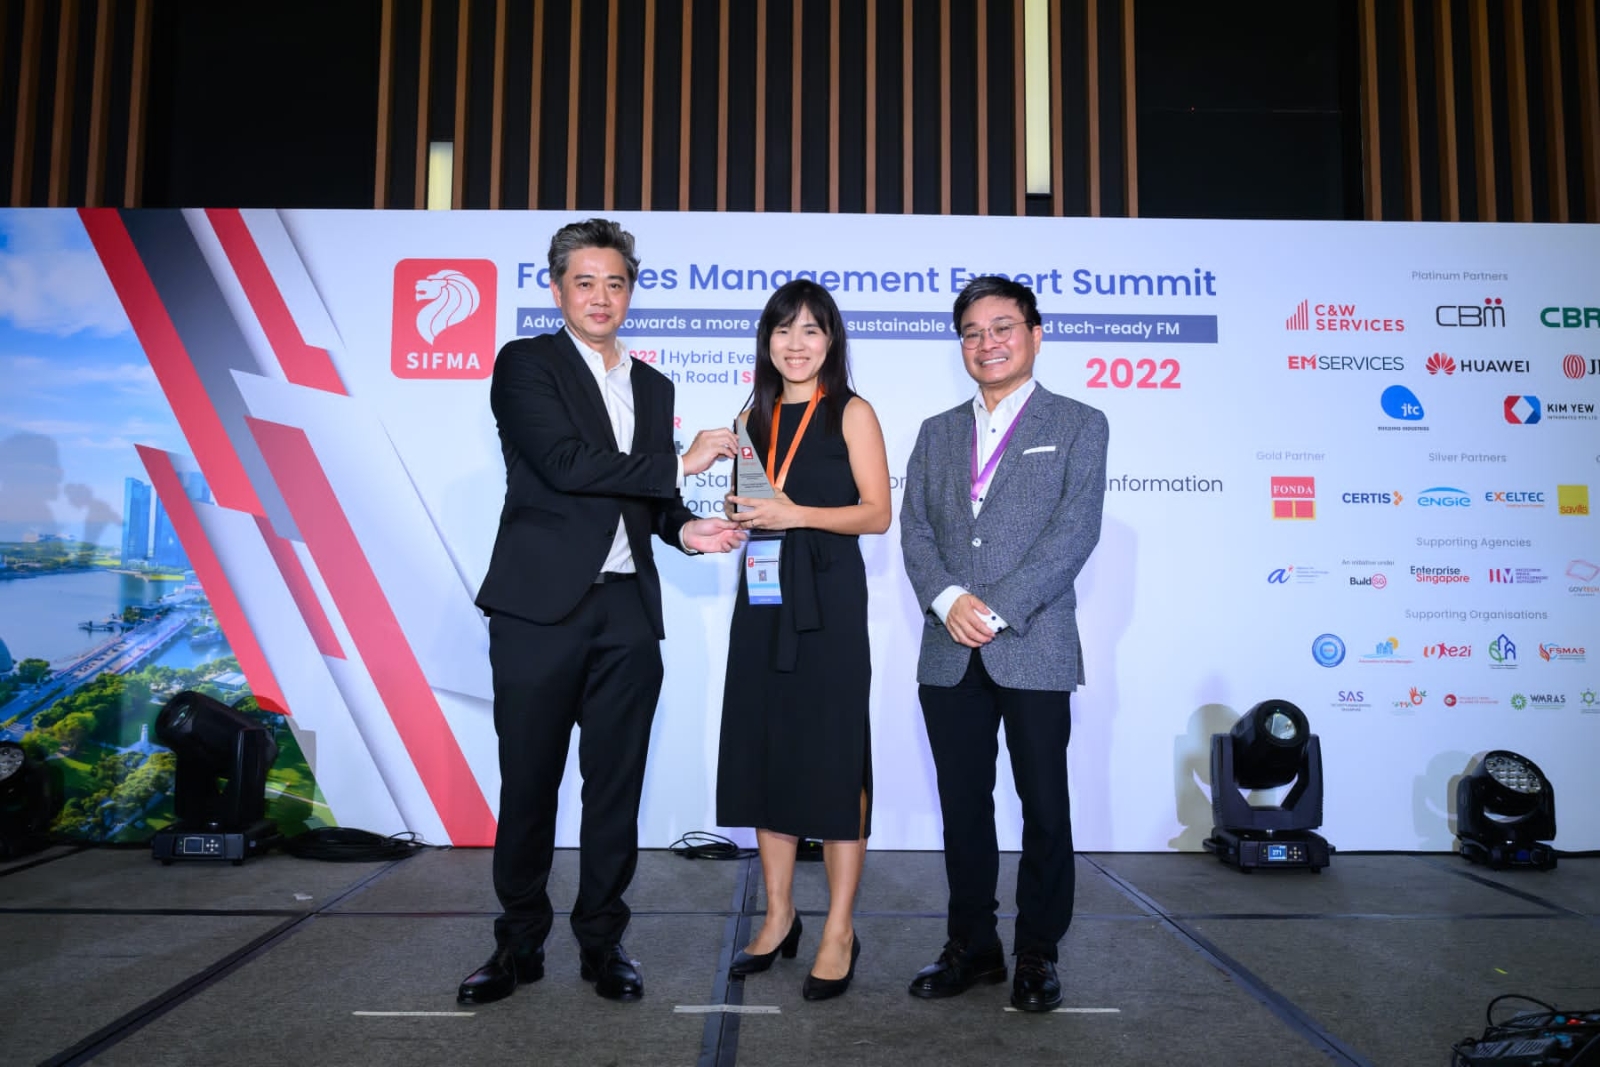 Karen (Jia Xin) Ng accepting the Smart FM Technology Integration Award